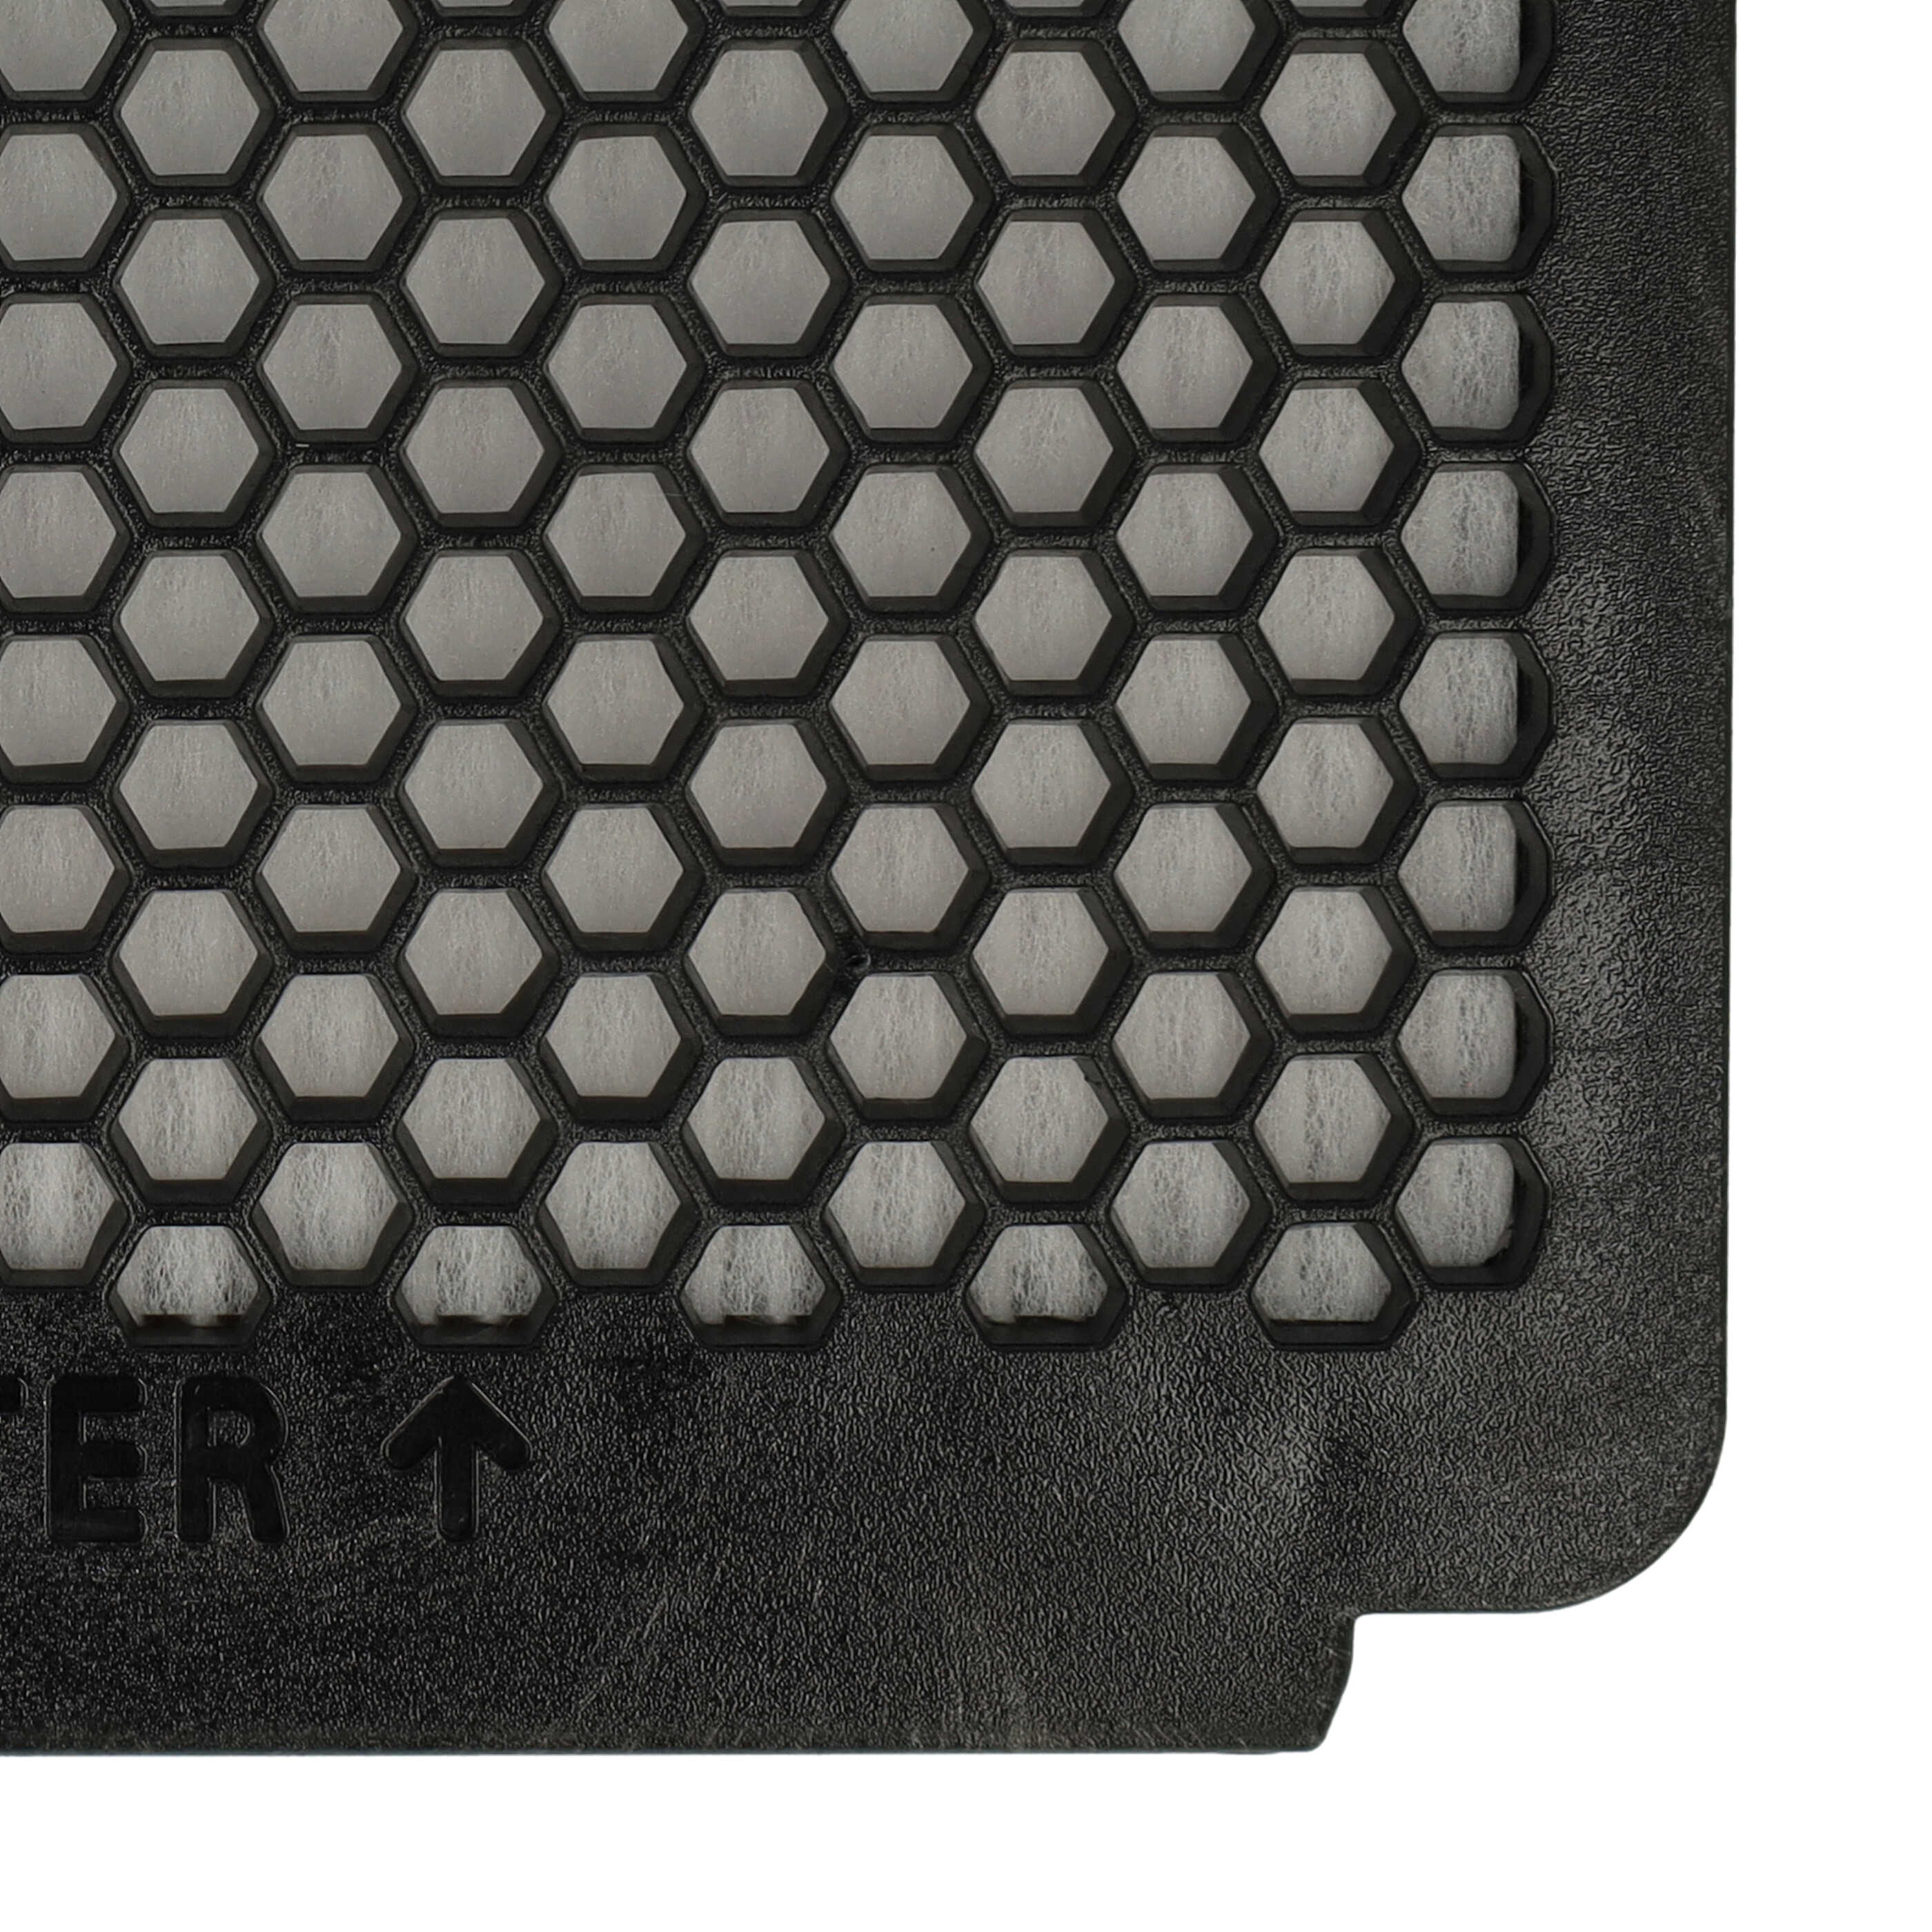 Filtr do odkurzacza Moulinex zamiennik Rowenta RS-RT4109, ZR902501 - filtr HEPA HEPA 13